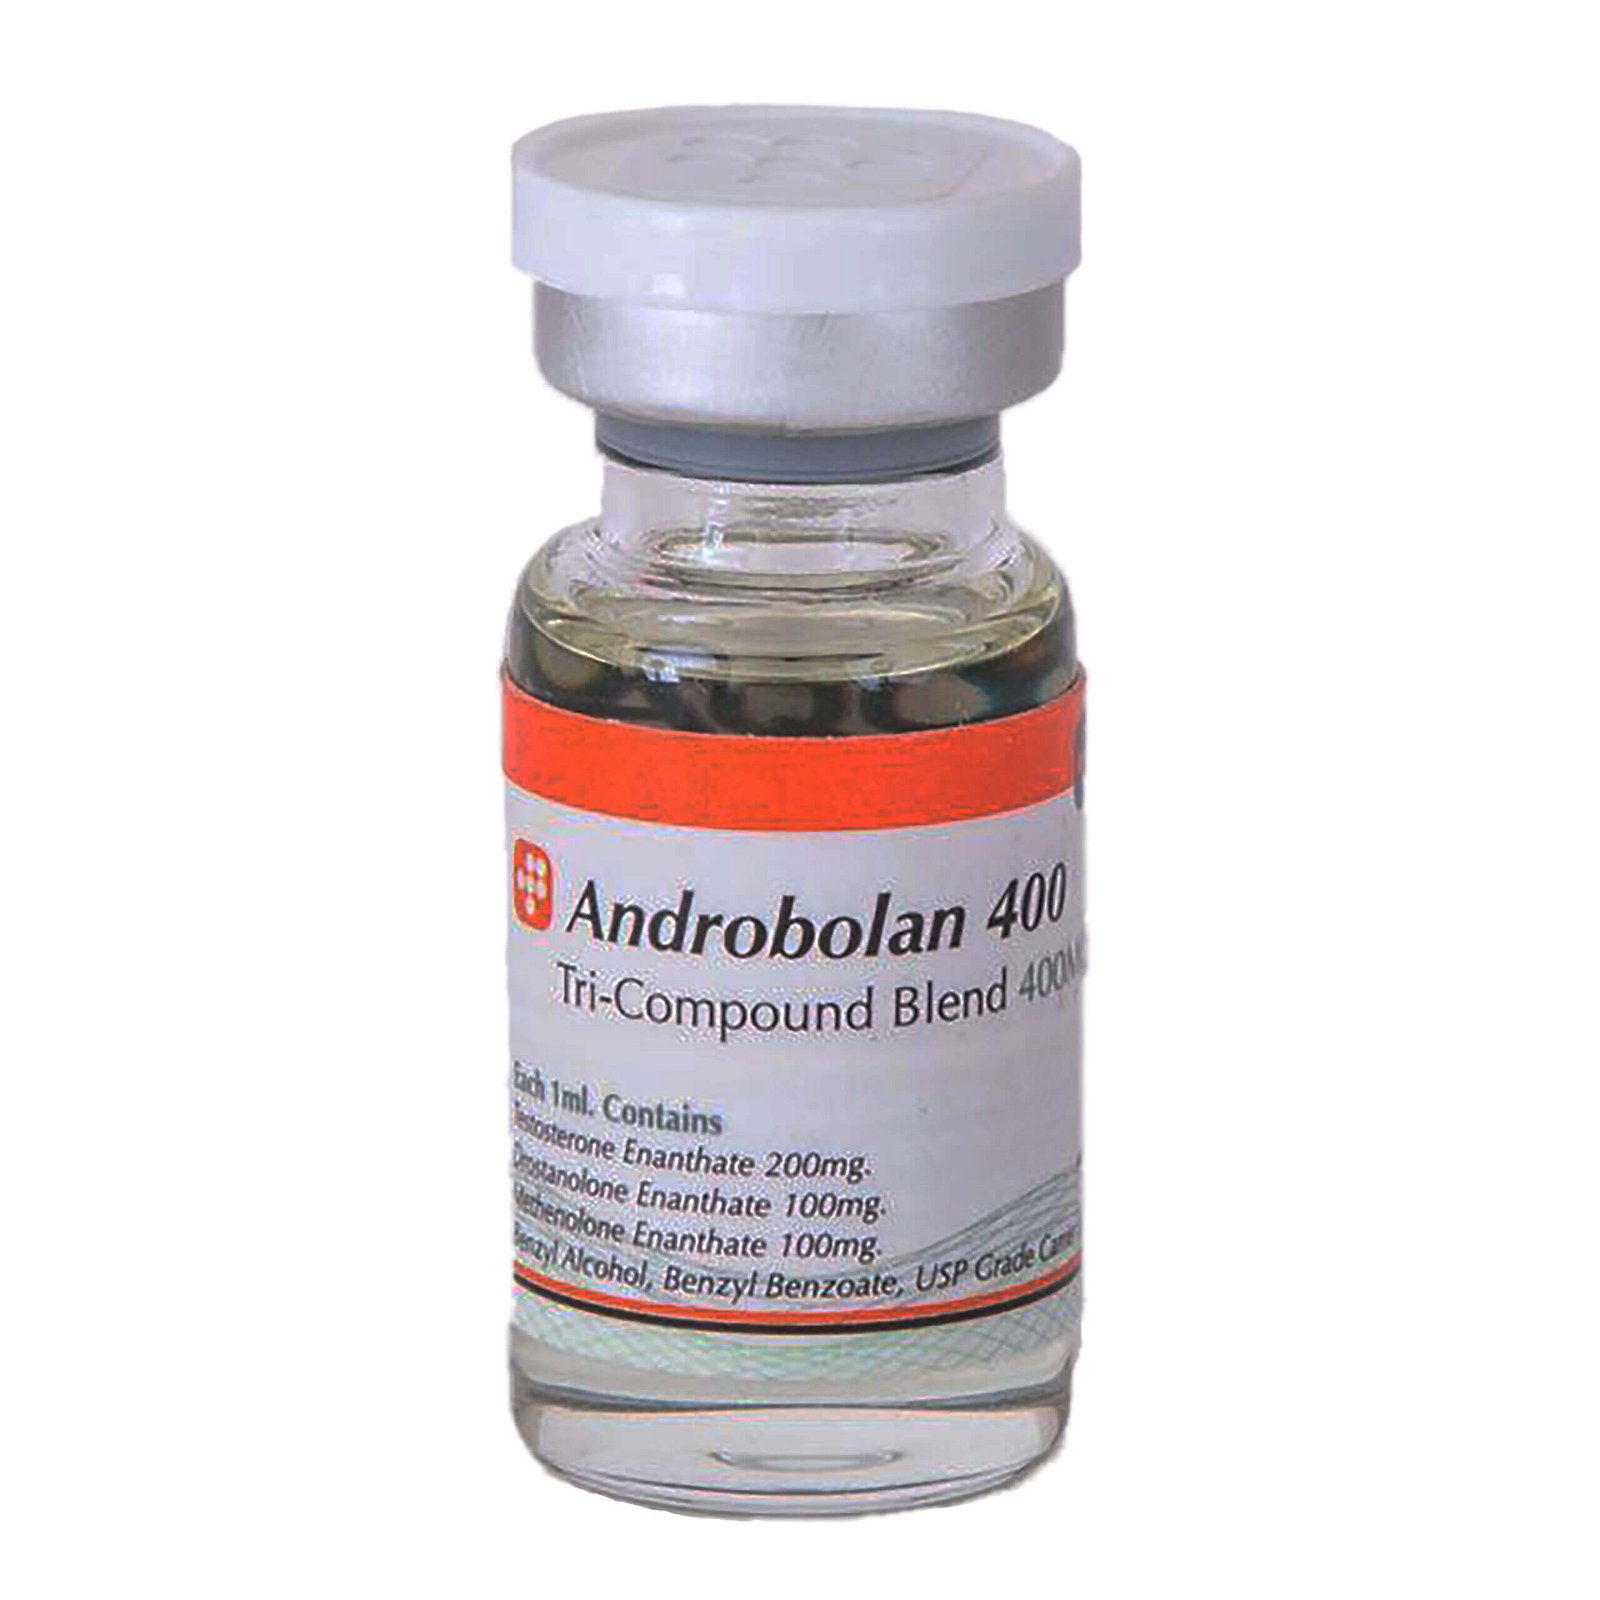 pharmaqo_androbolan-scale